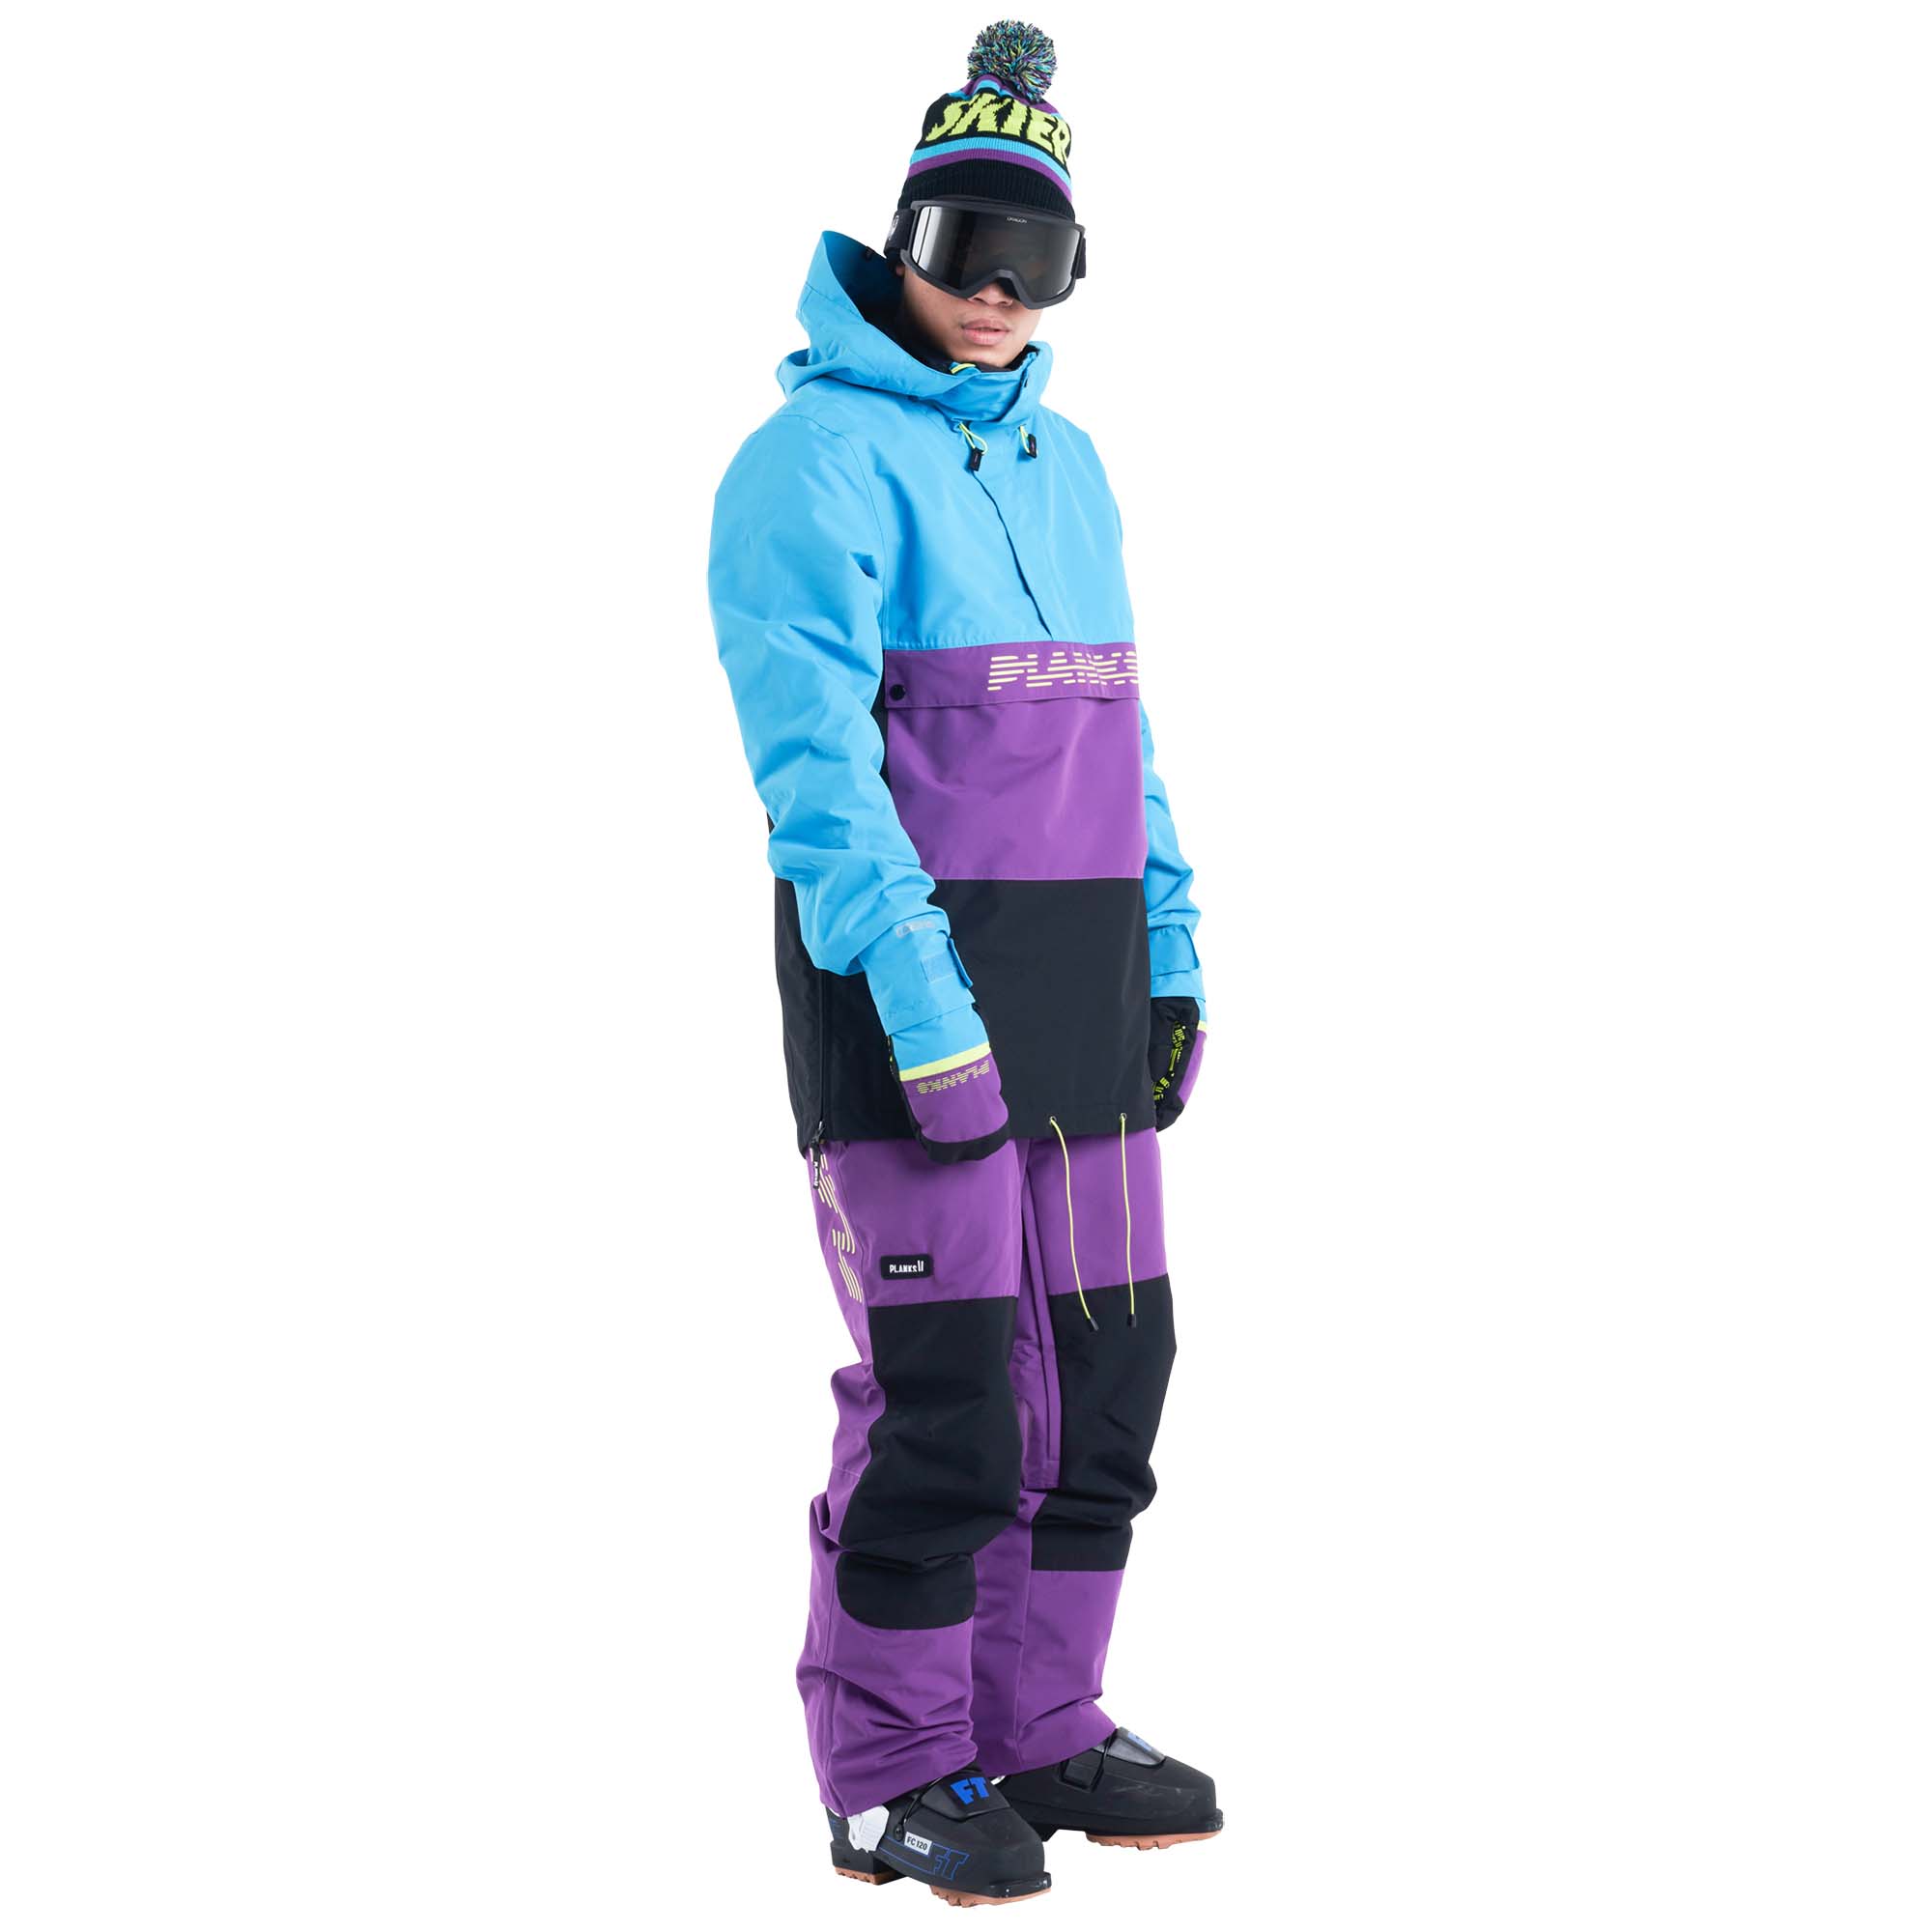 Planks Easy Rider Ski/Snowboard Pants